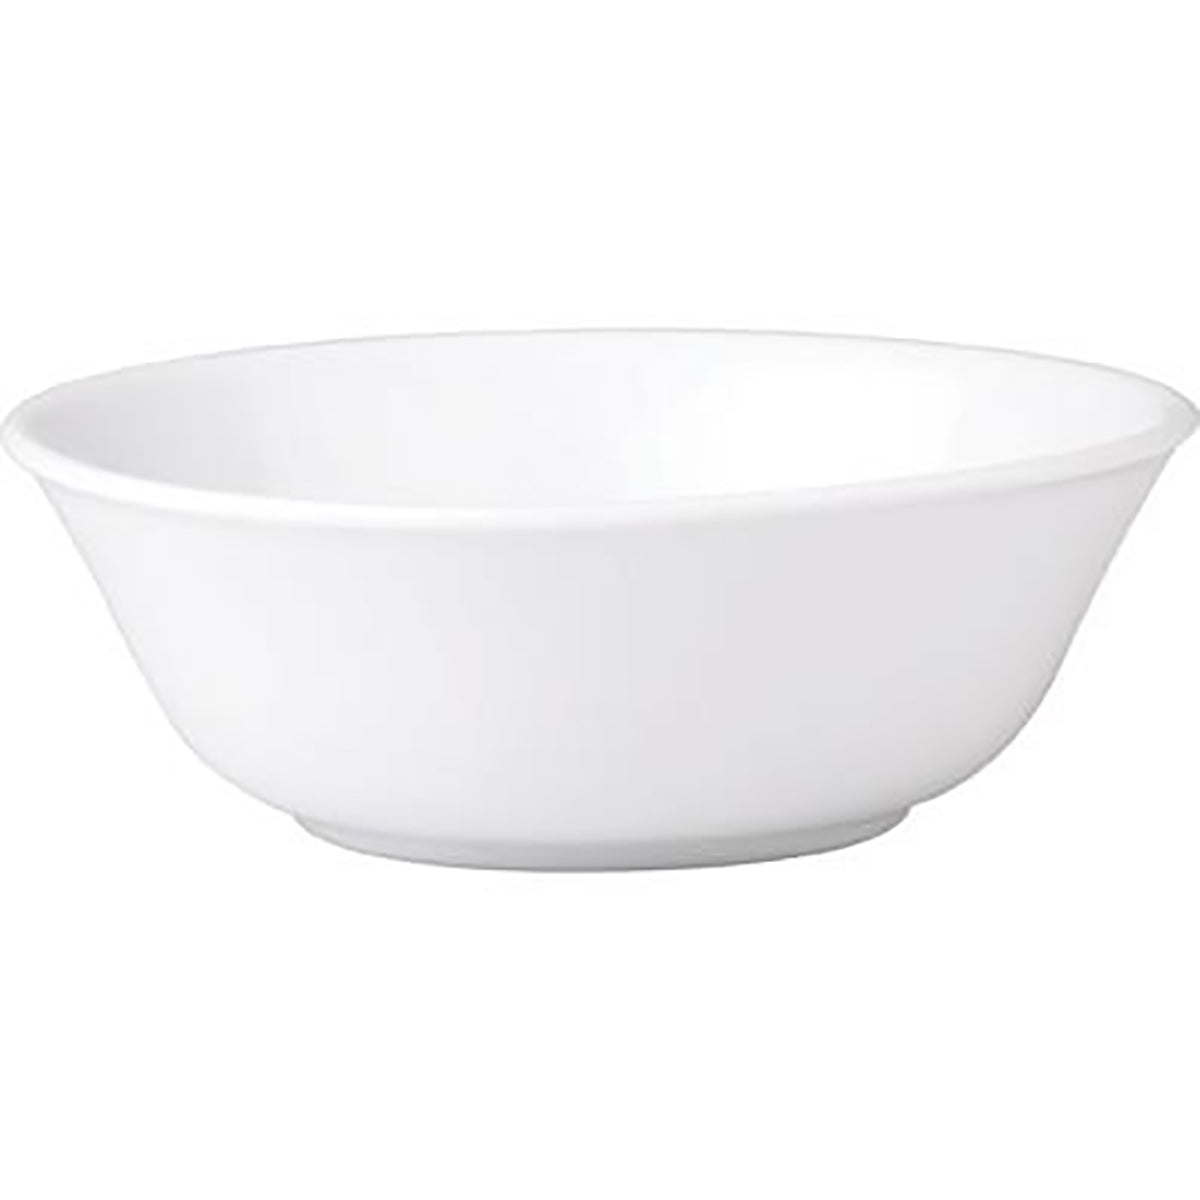 94329 Royal Porcelain Chelsea Noodle Bowl 190mm (4072) Tomkin Australia Hospitality Supplies